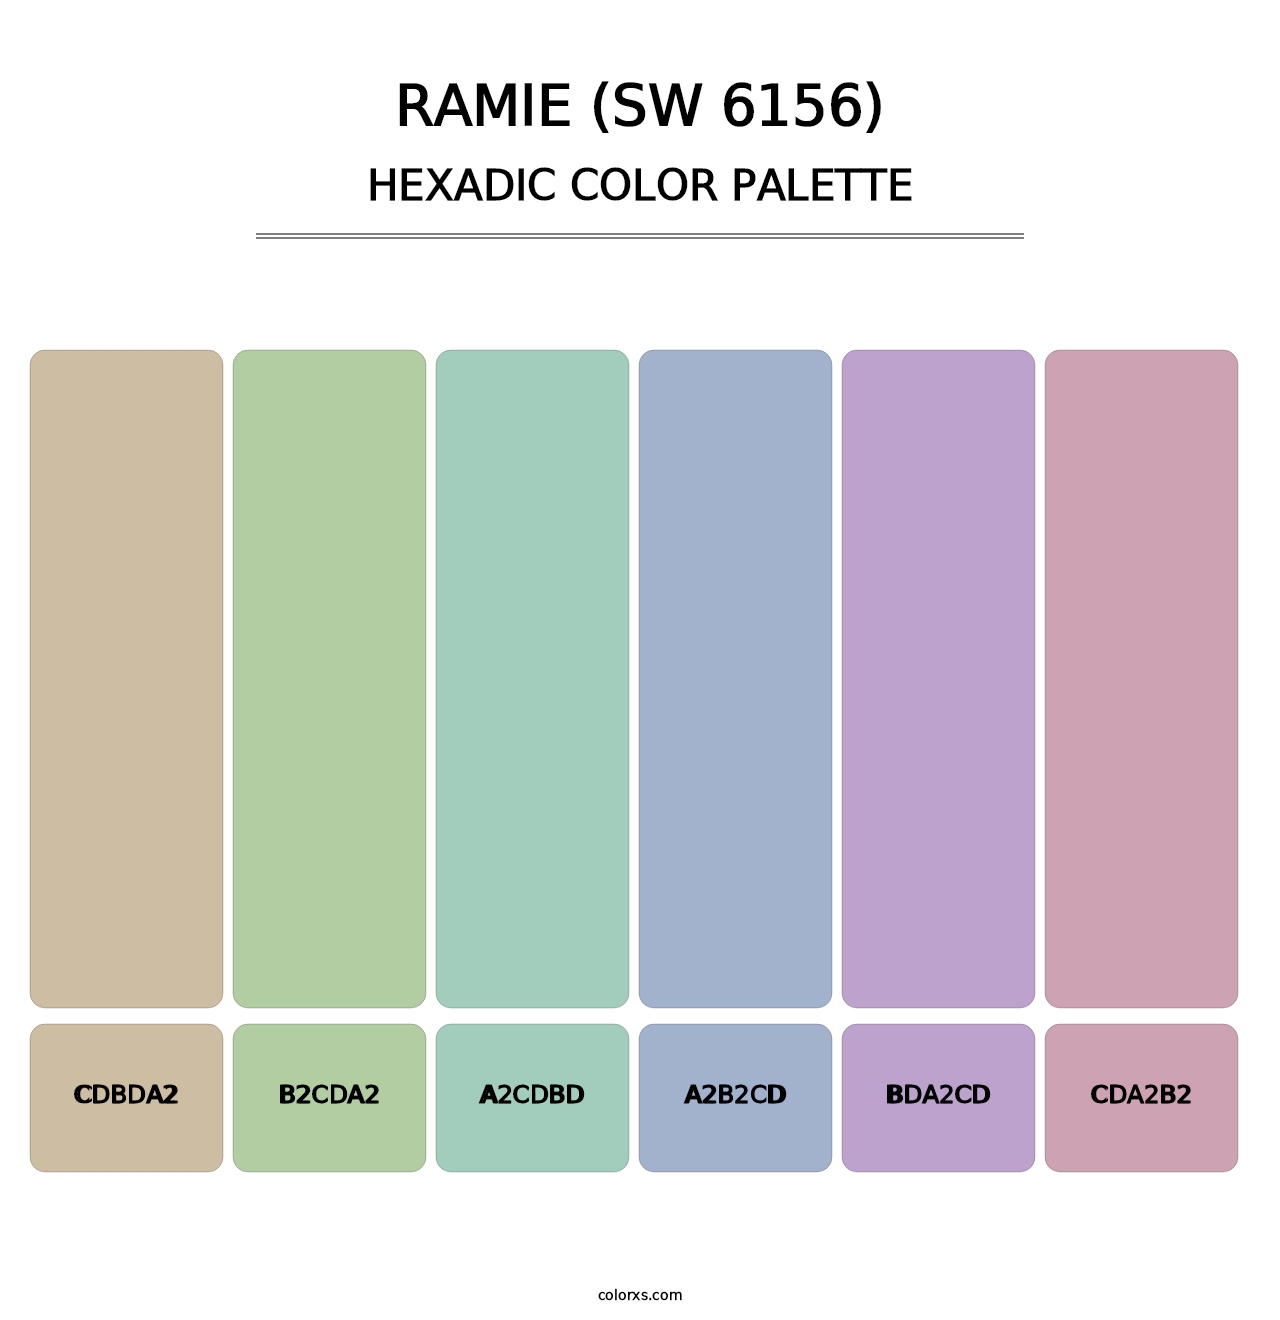 Ramie (SW 6156) - Hexadic Color Palette